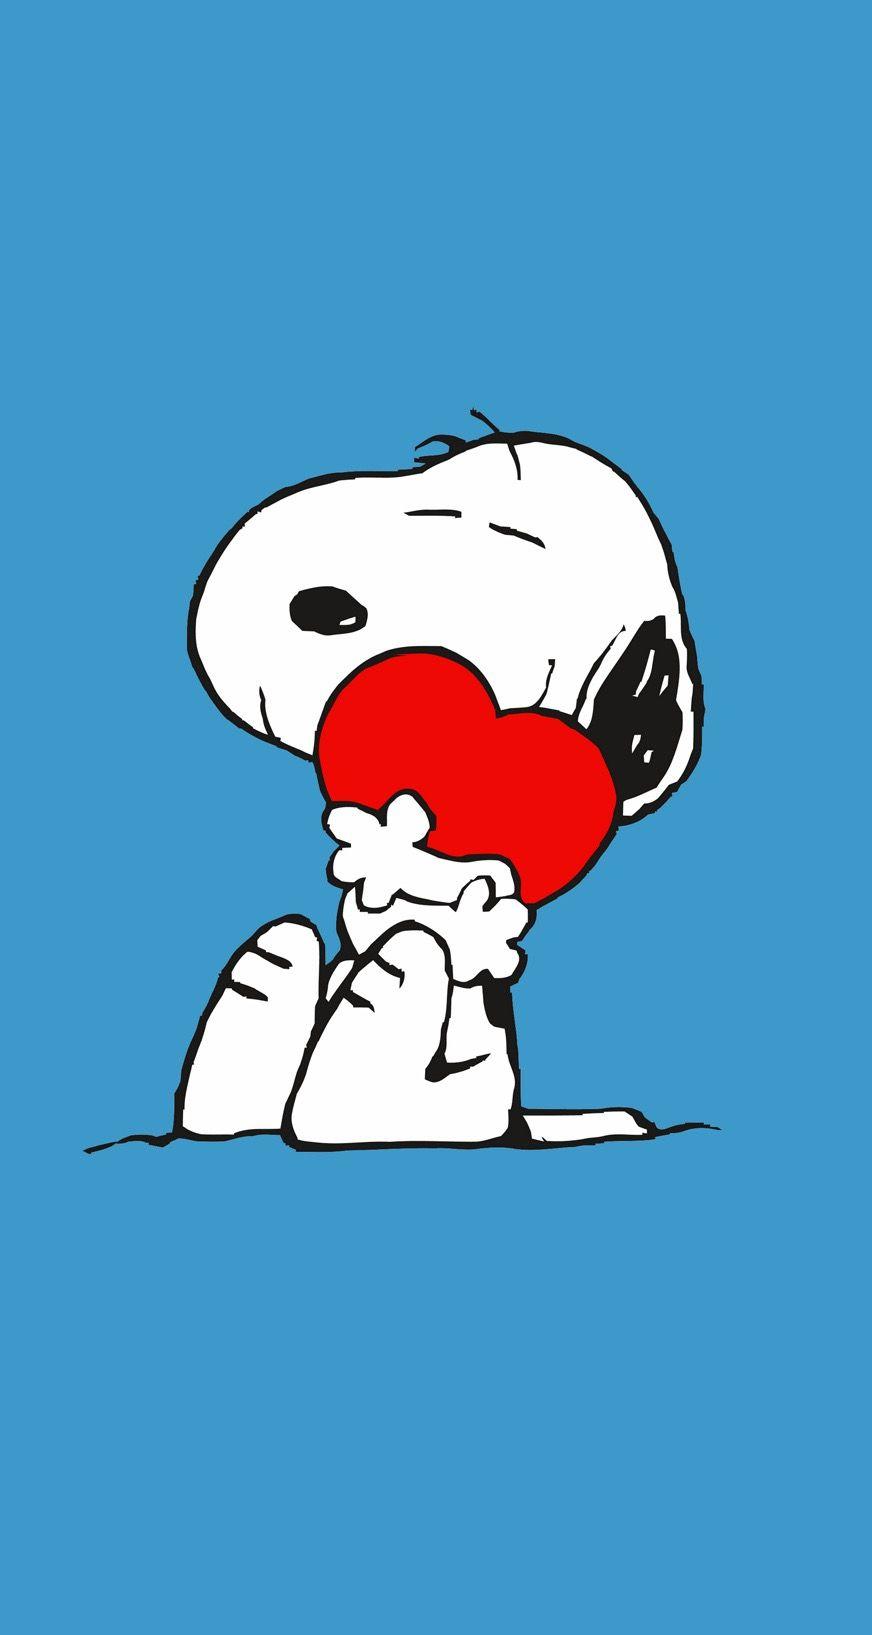 Snoopy love!. gift wrap ideas! 2. Snoopy and Cartoon